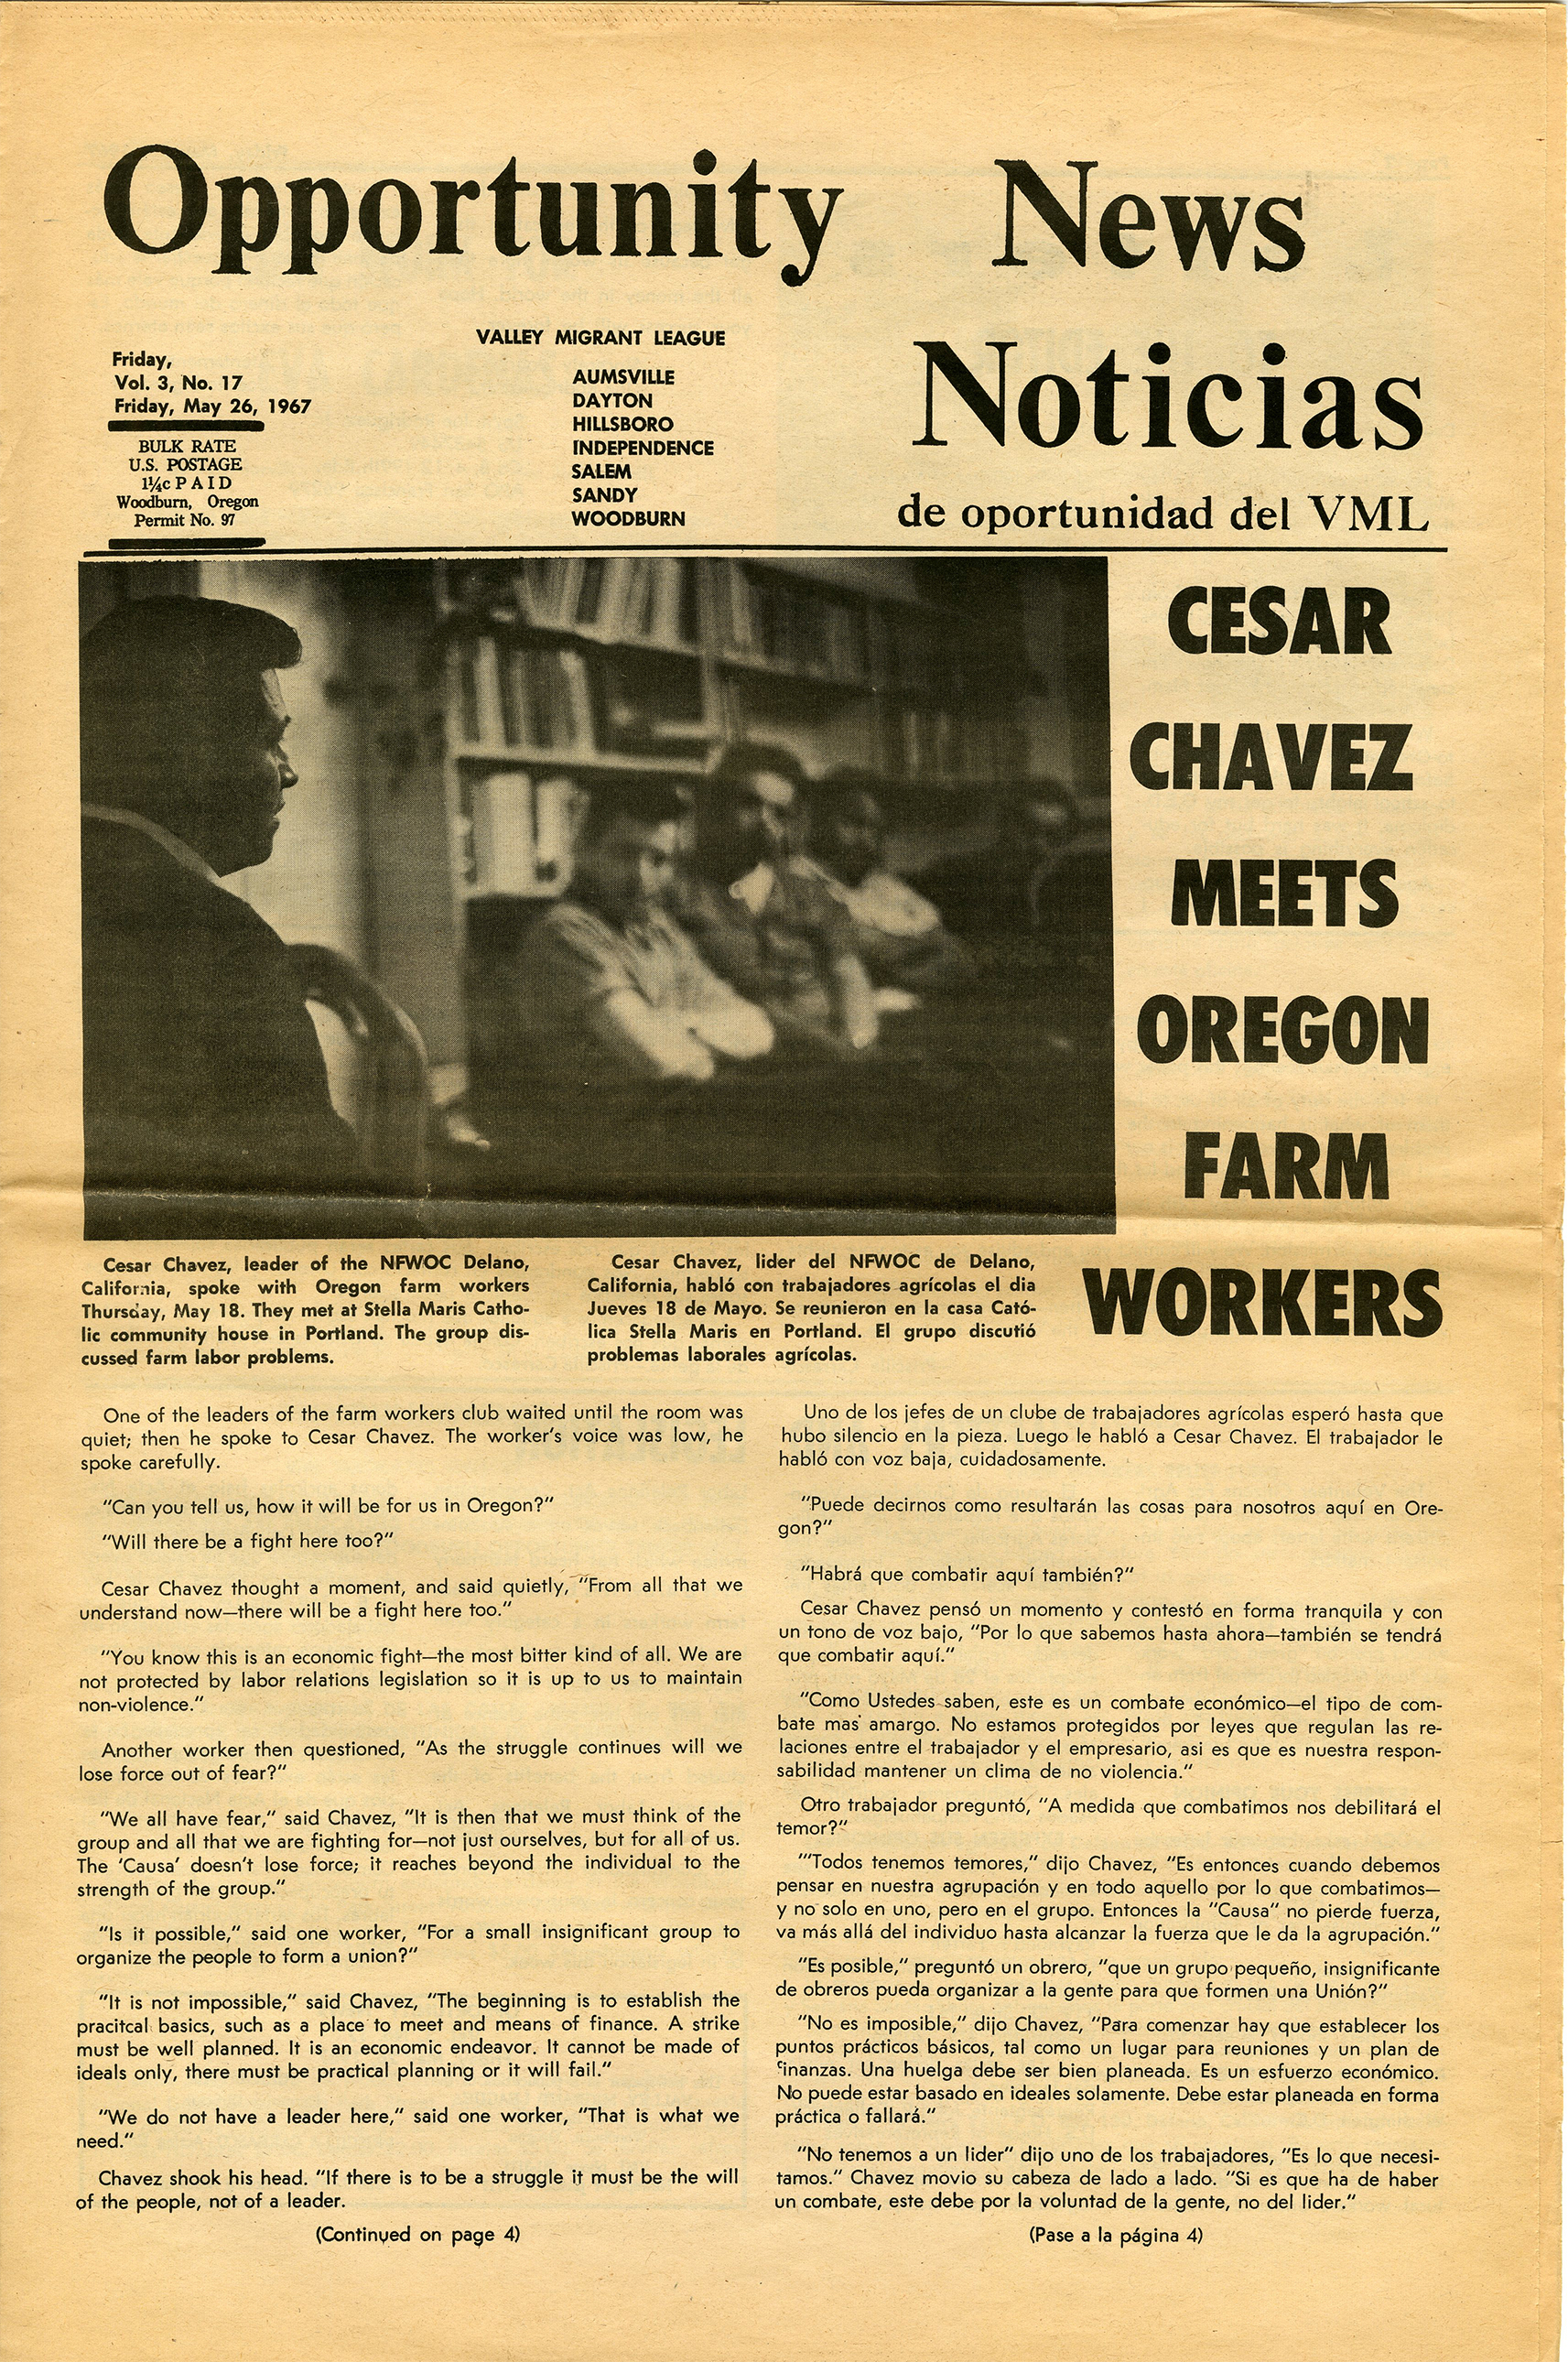 Preview of next document: 4. Noticias de oportunidad del VML/Opportunity News, 1967